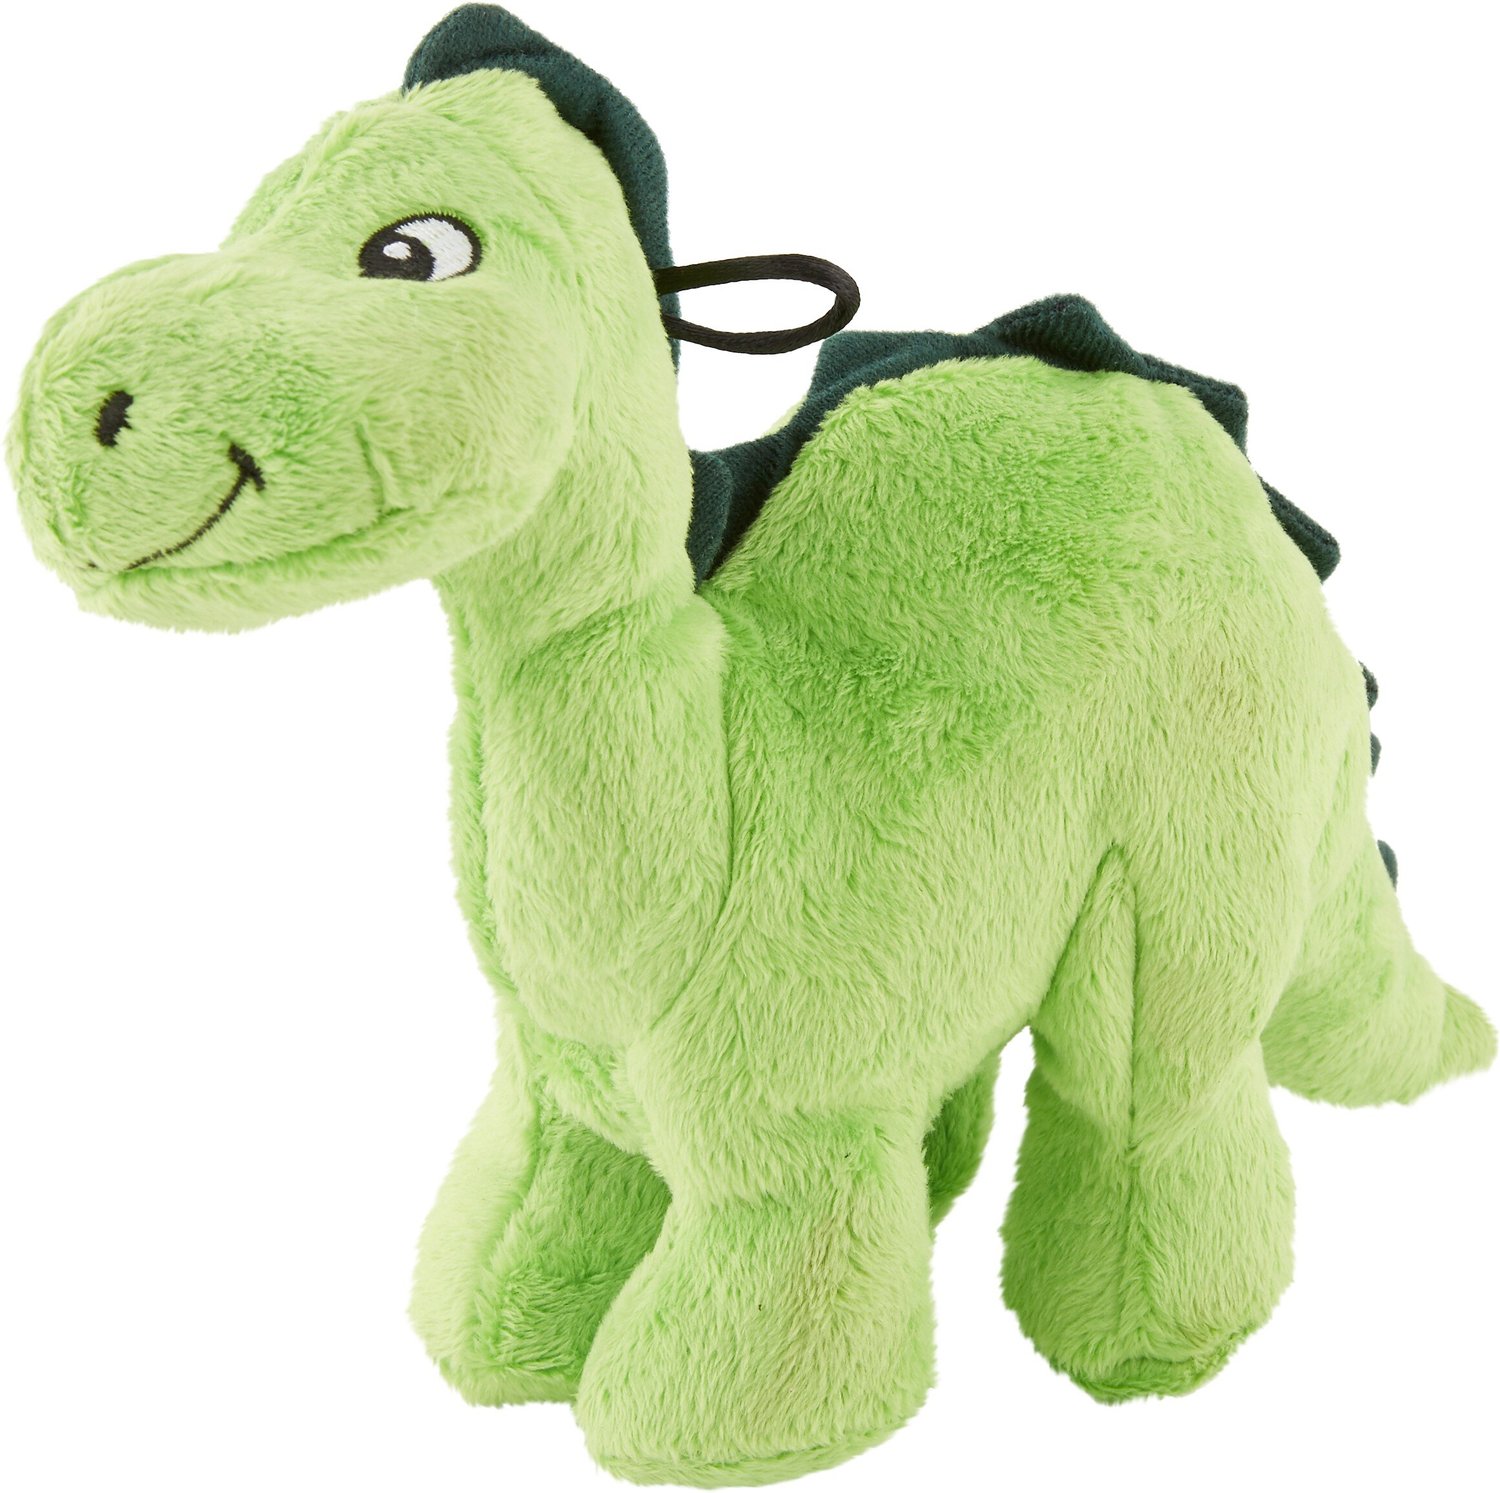 green stuffed dog